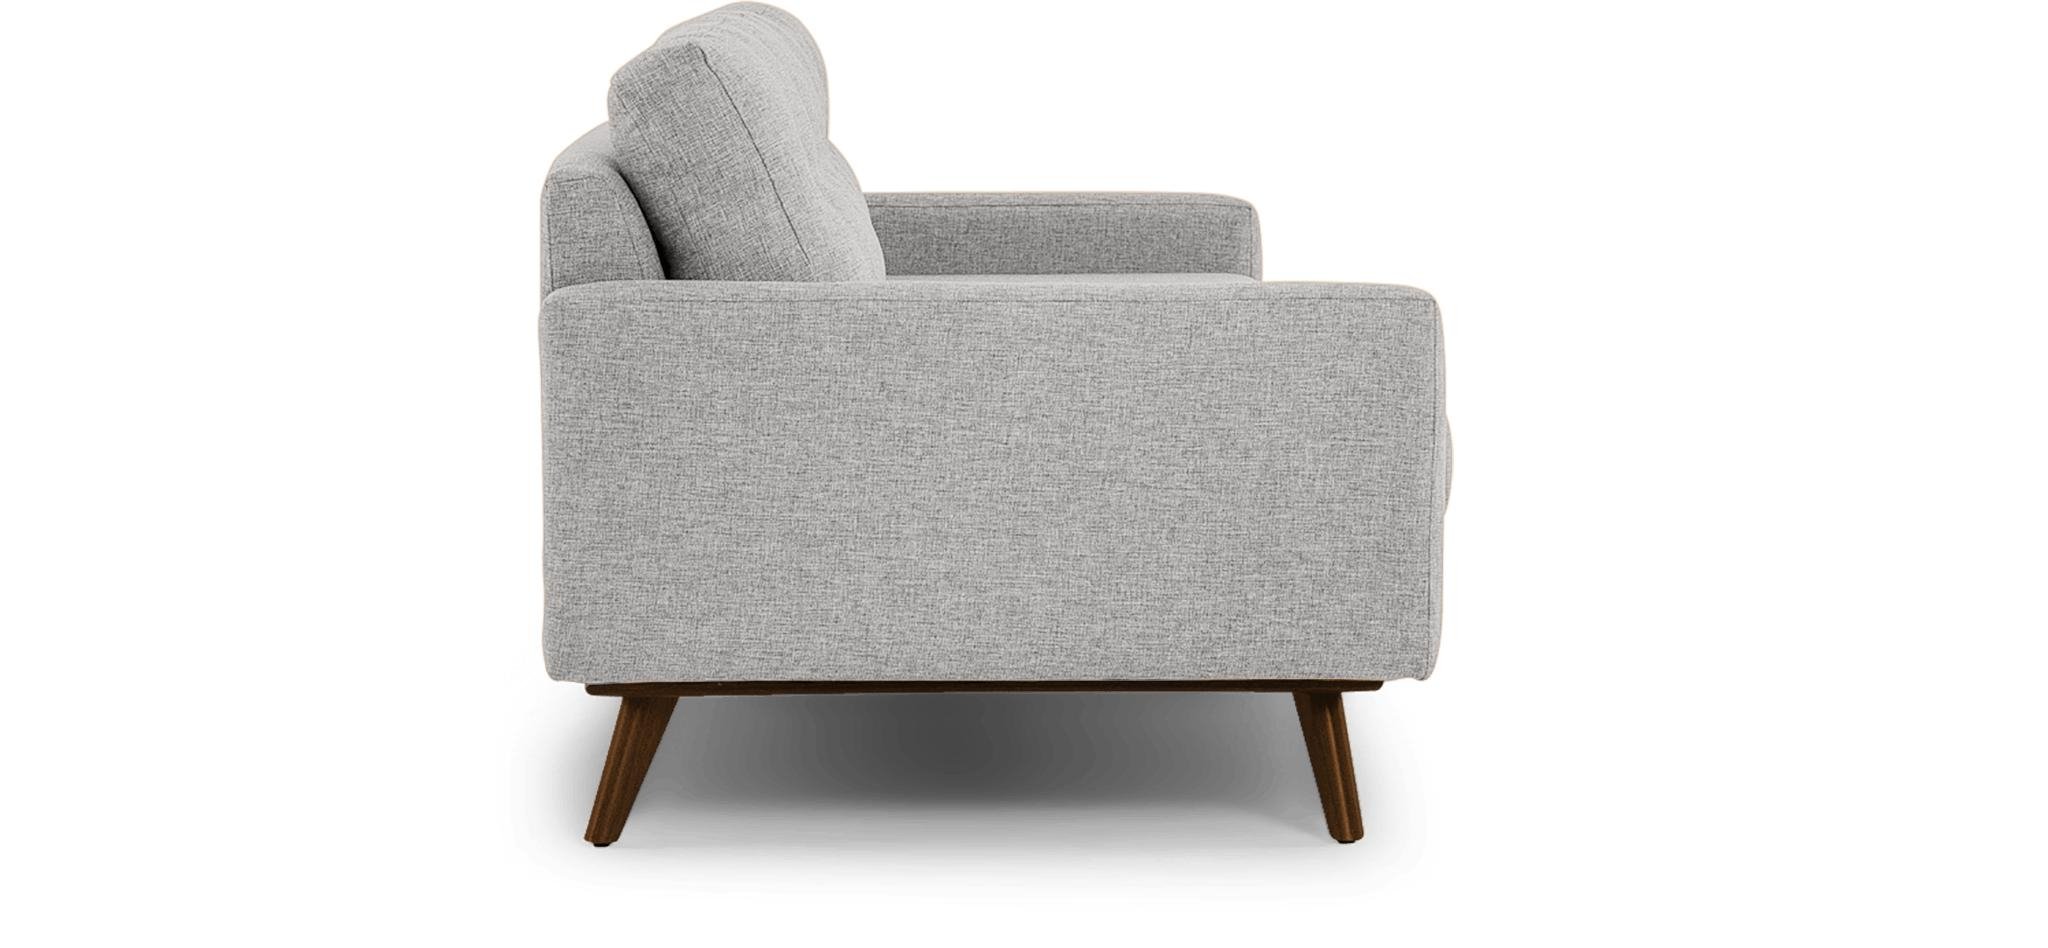 Gray Hopson Mid Century Modern Grand Sofa - Sunbrella Premier Fog - Mocha - Image 2